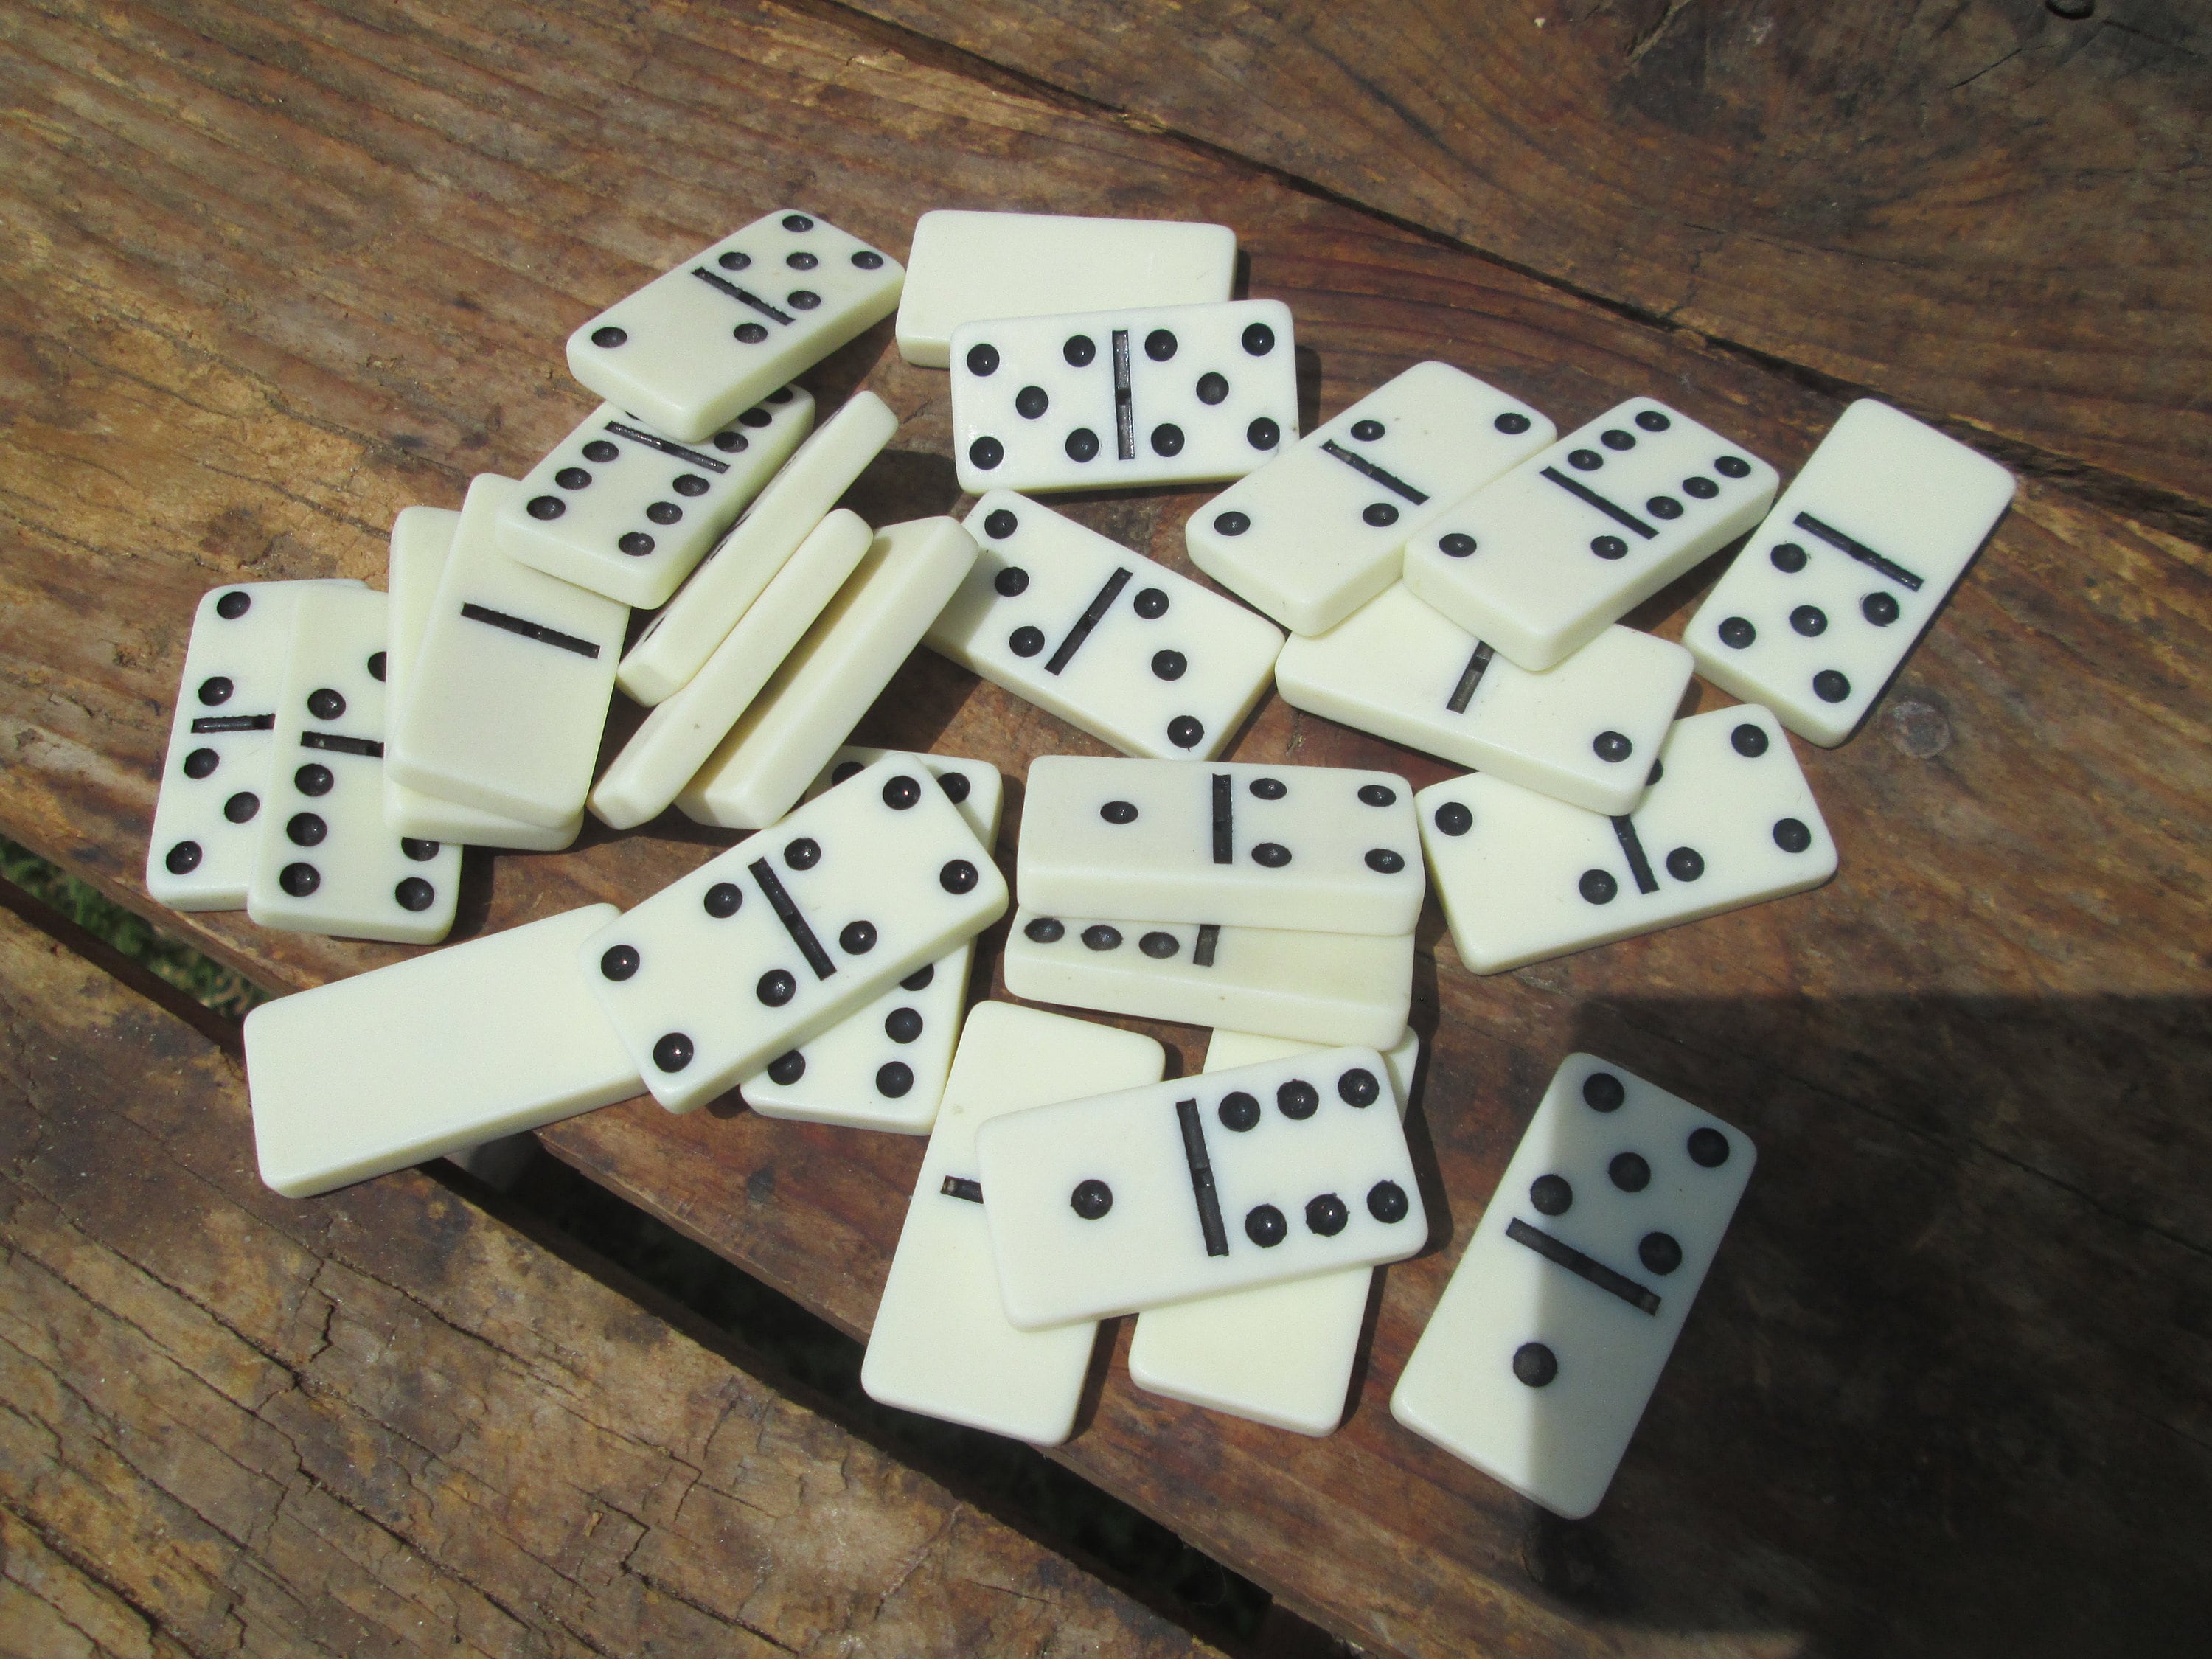 dominoes online game